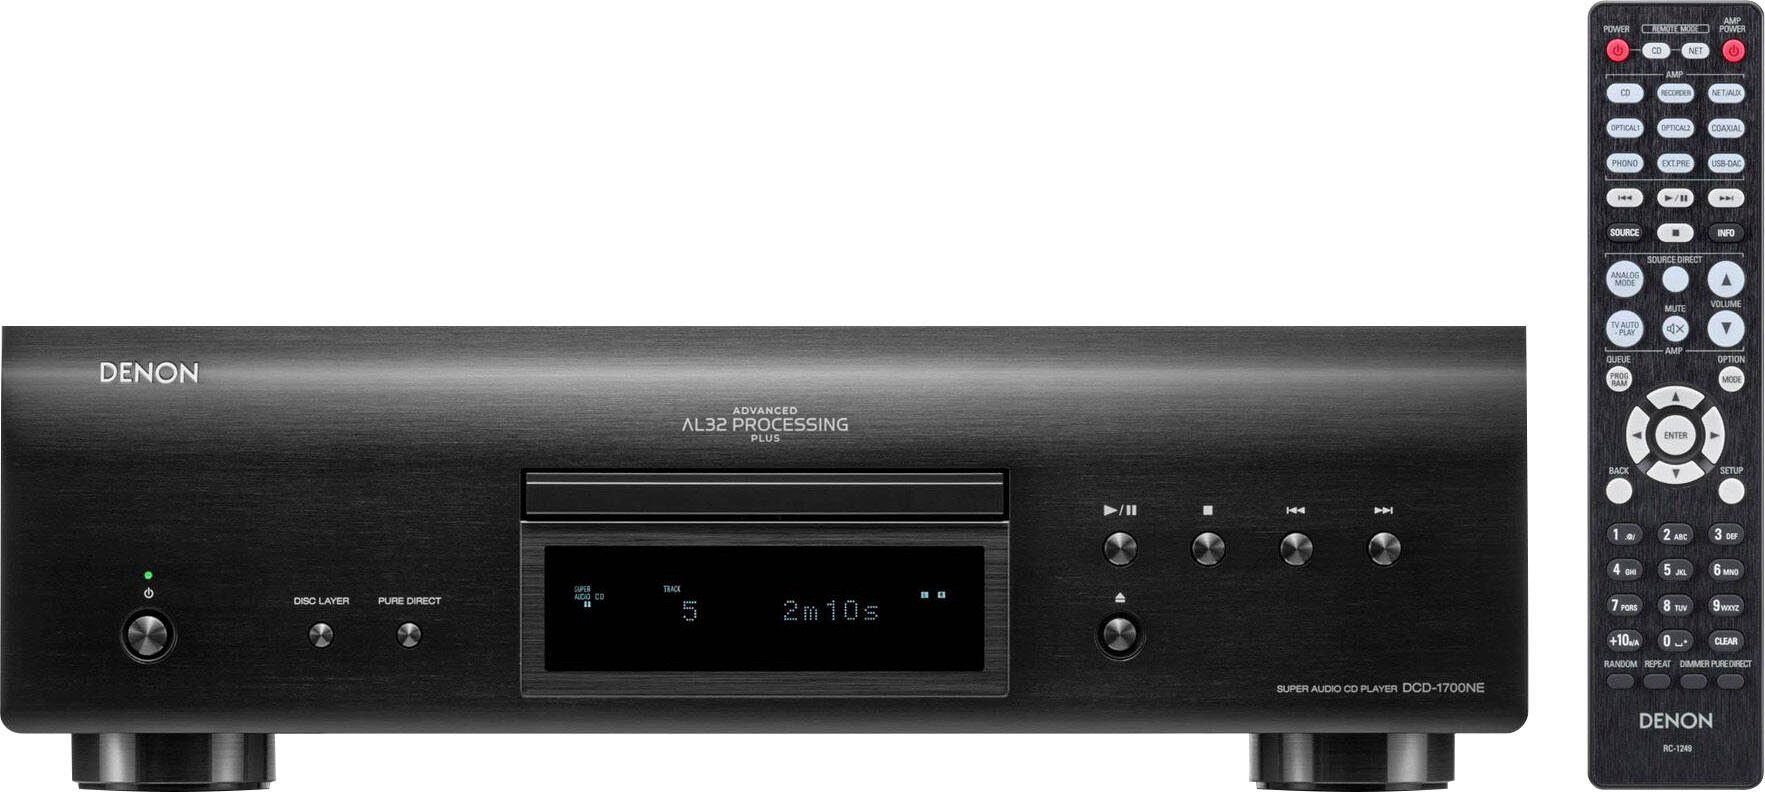 DCD-1700NE Denon CD-Player